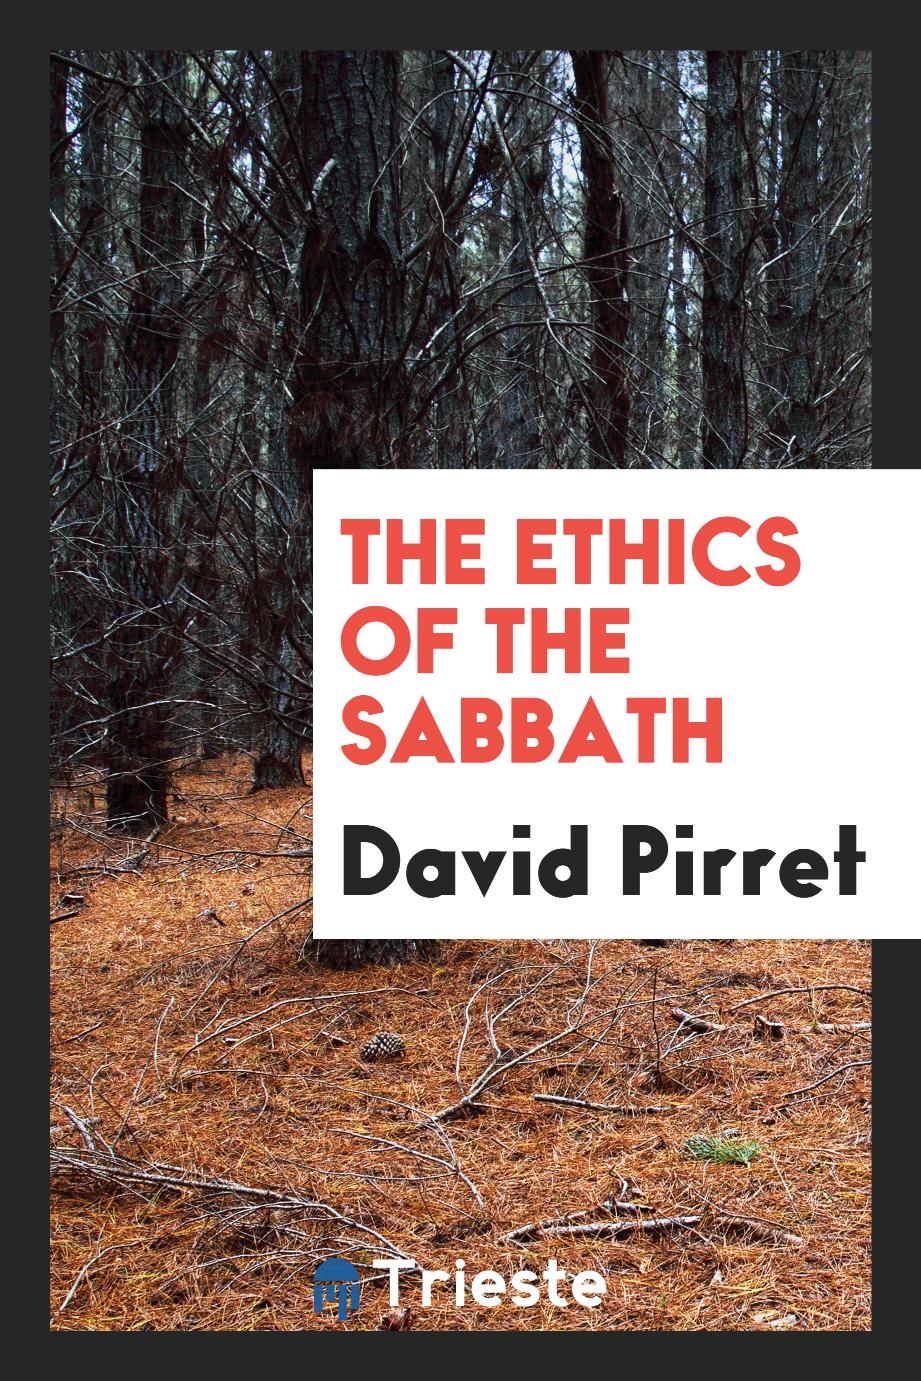 David Pirret - The ethics of the sabbath